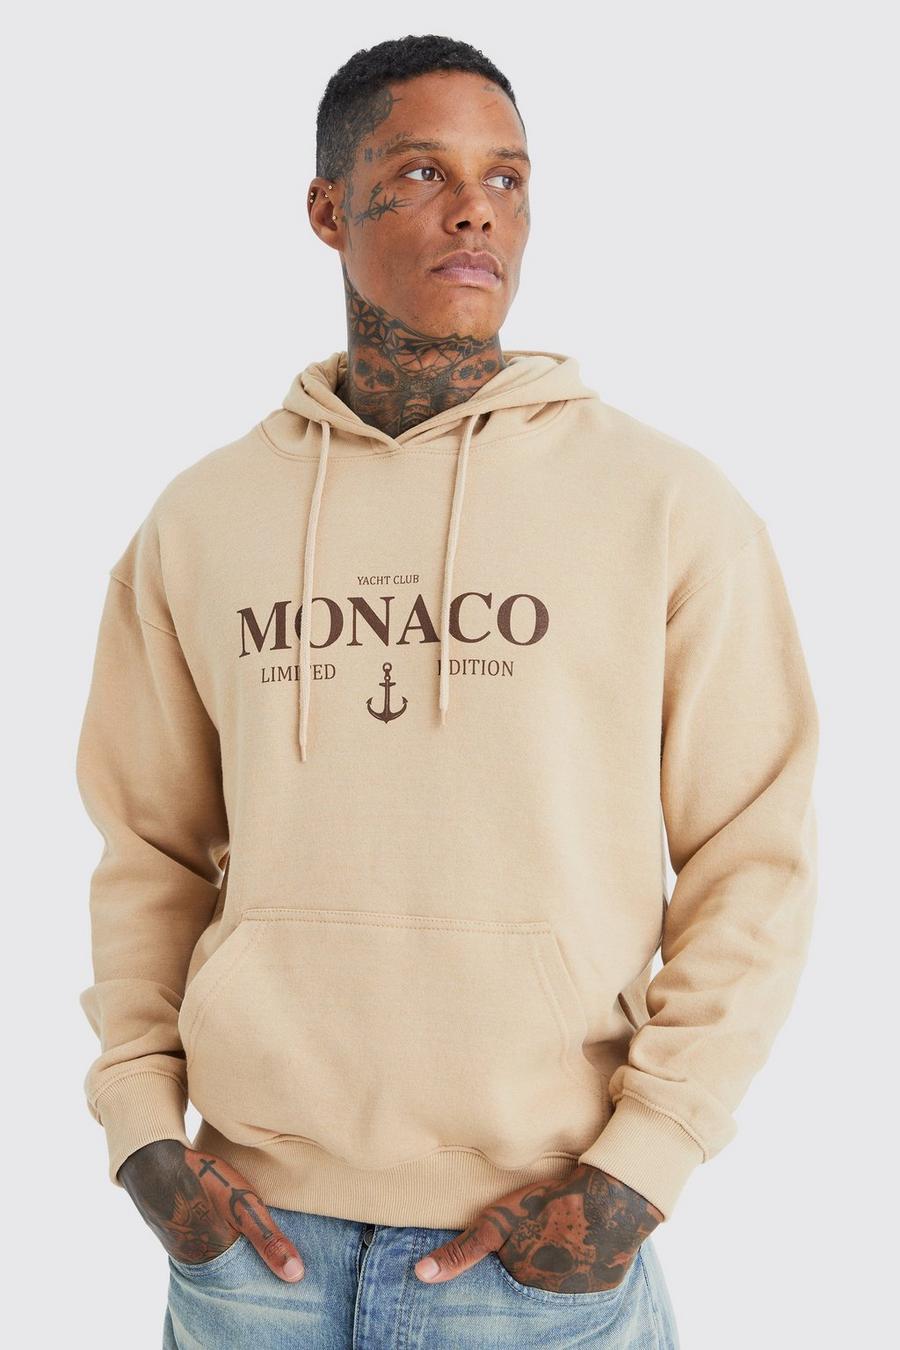 Sand beige Oversized Monaco Limited Edition Hoodie